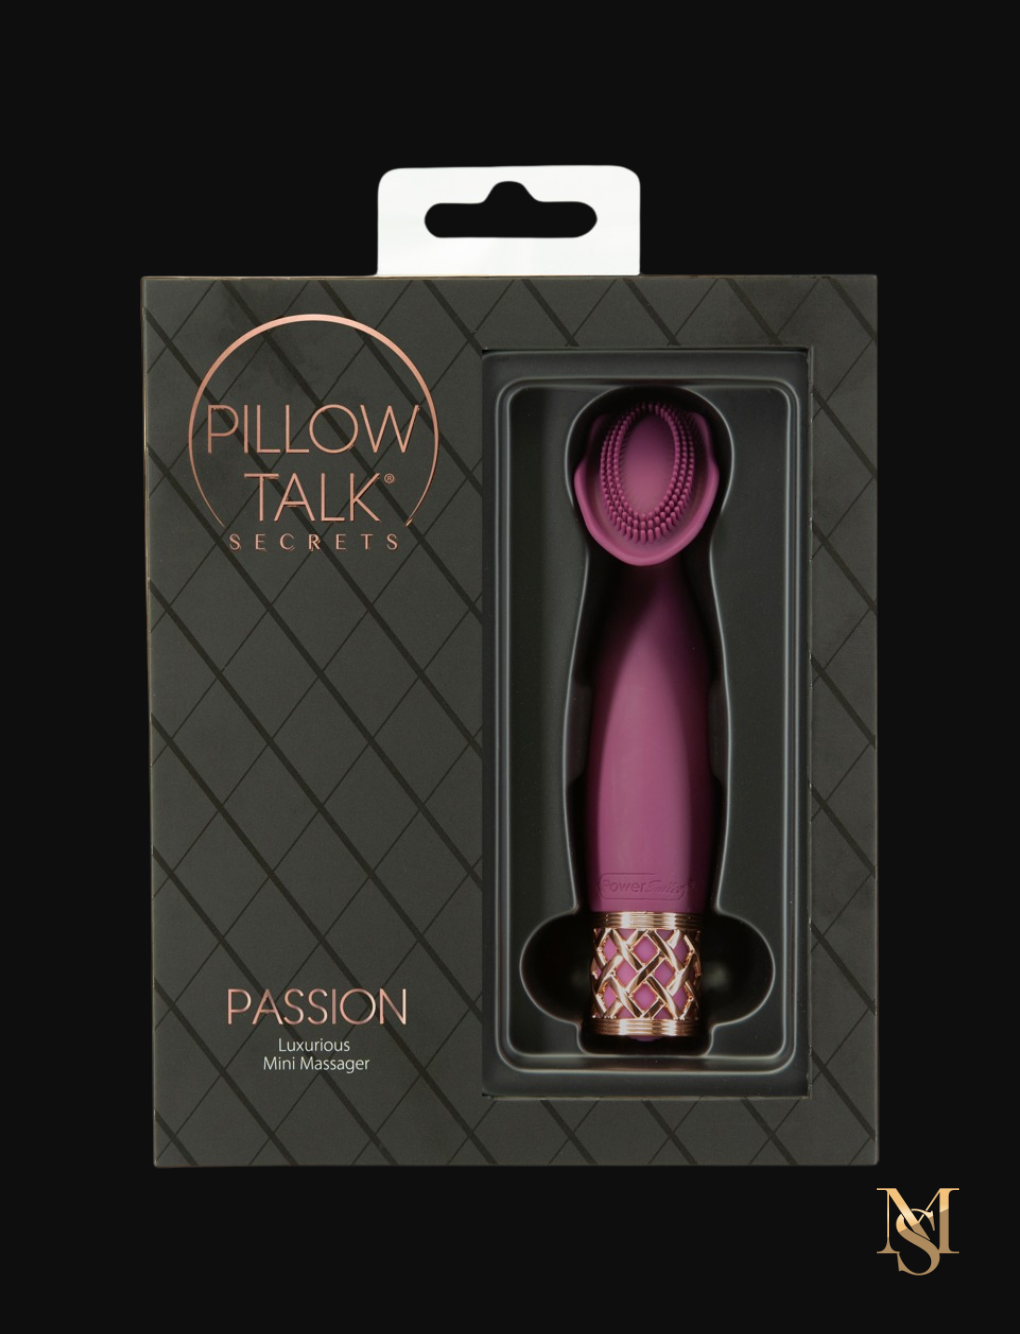 Pillow Talk Passion